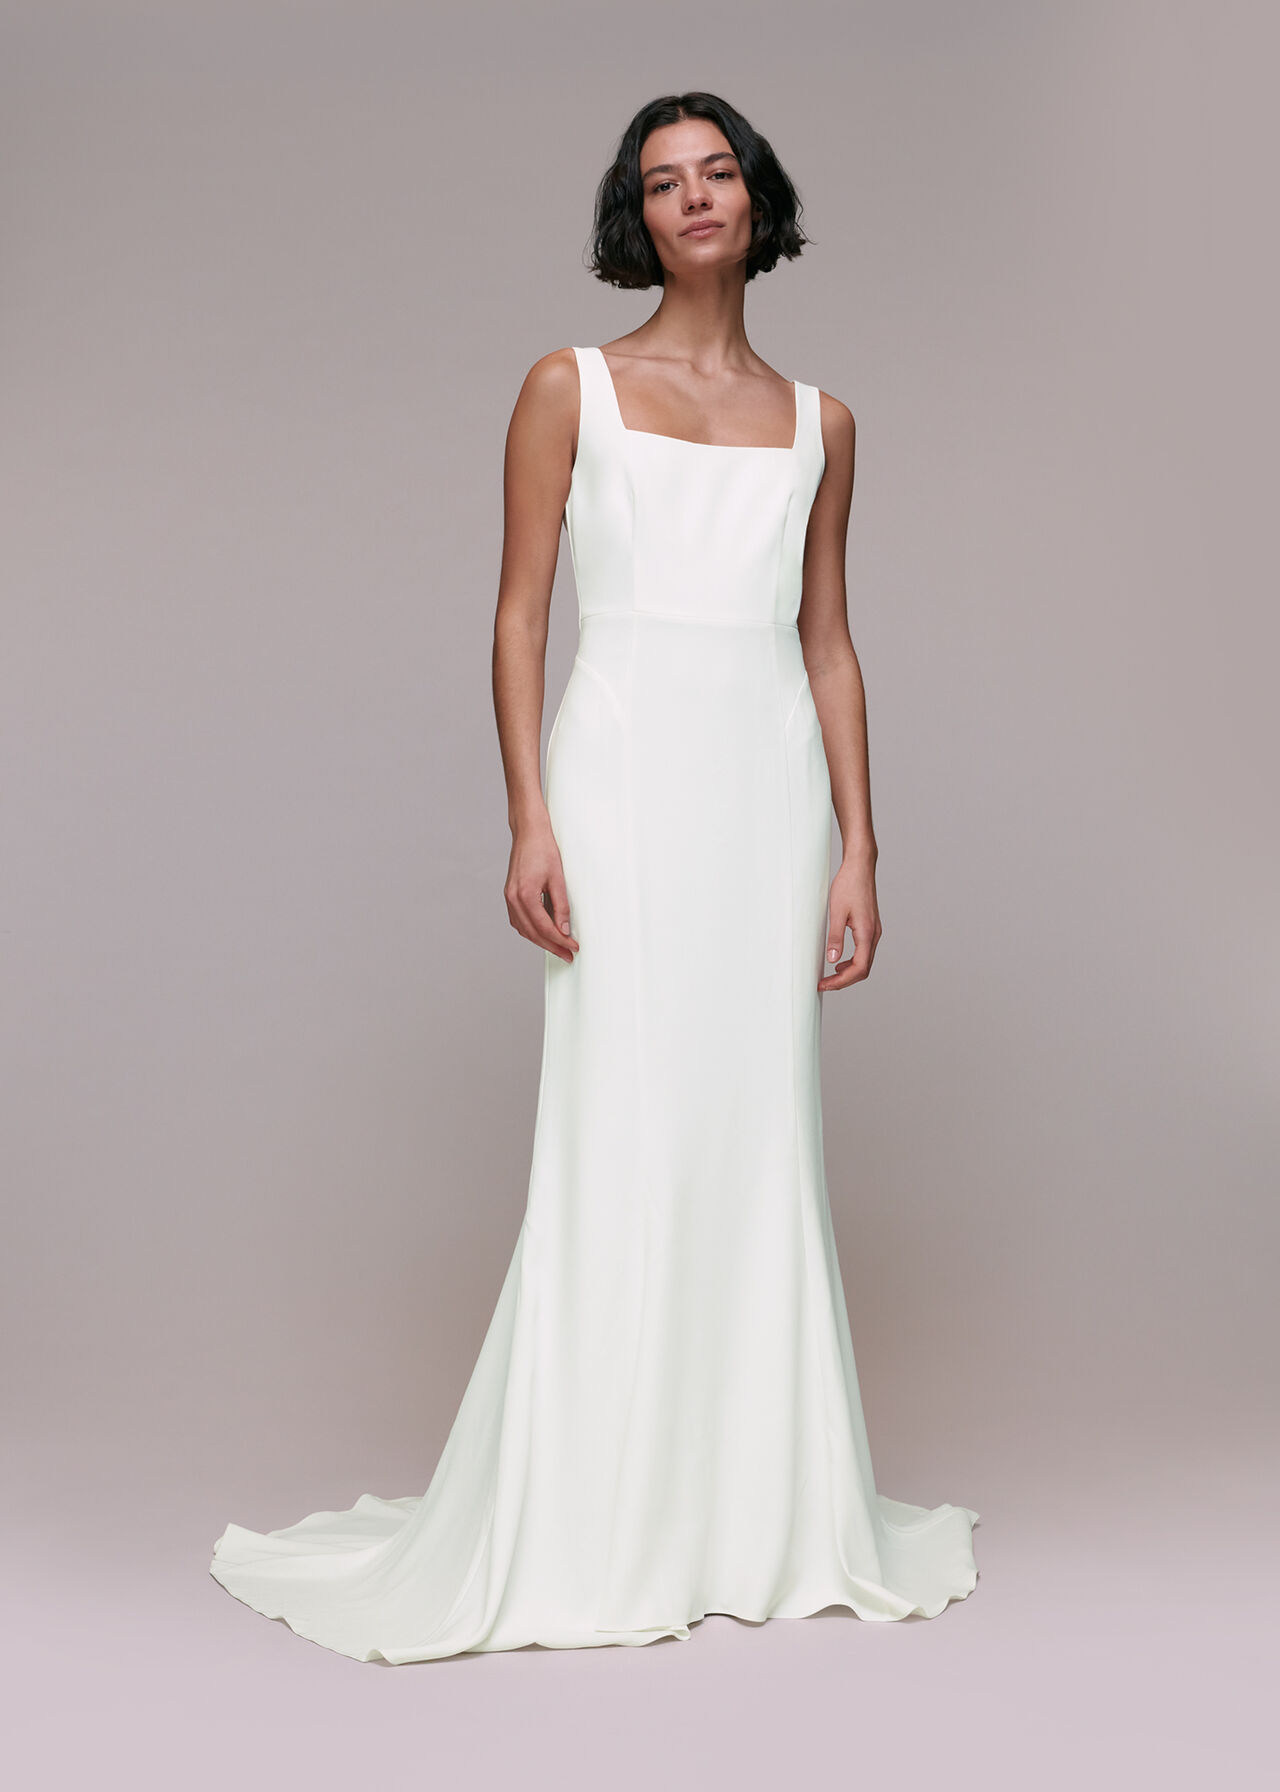 Sleek Sleeveless Bridal Gown, Free UK Shipping at Whistles